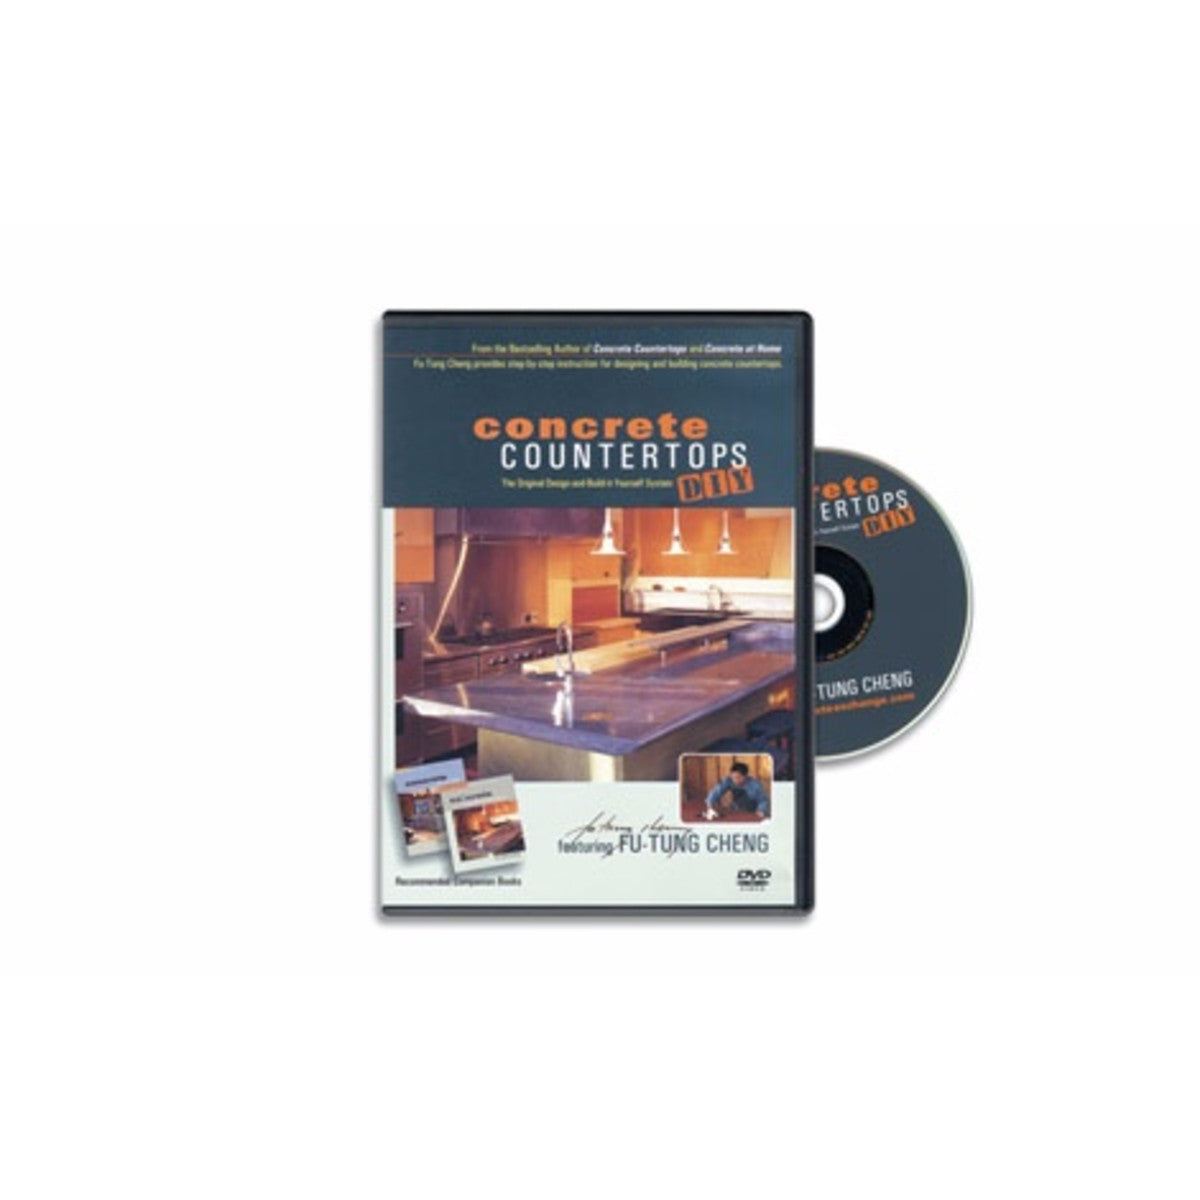 Concrete Countertops Diy Instructional Video Dvd Format